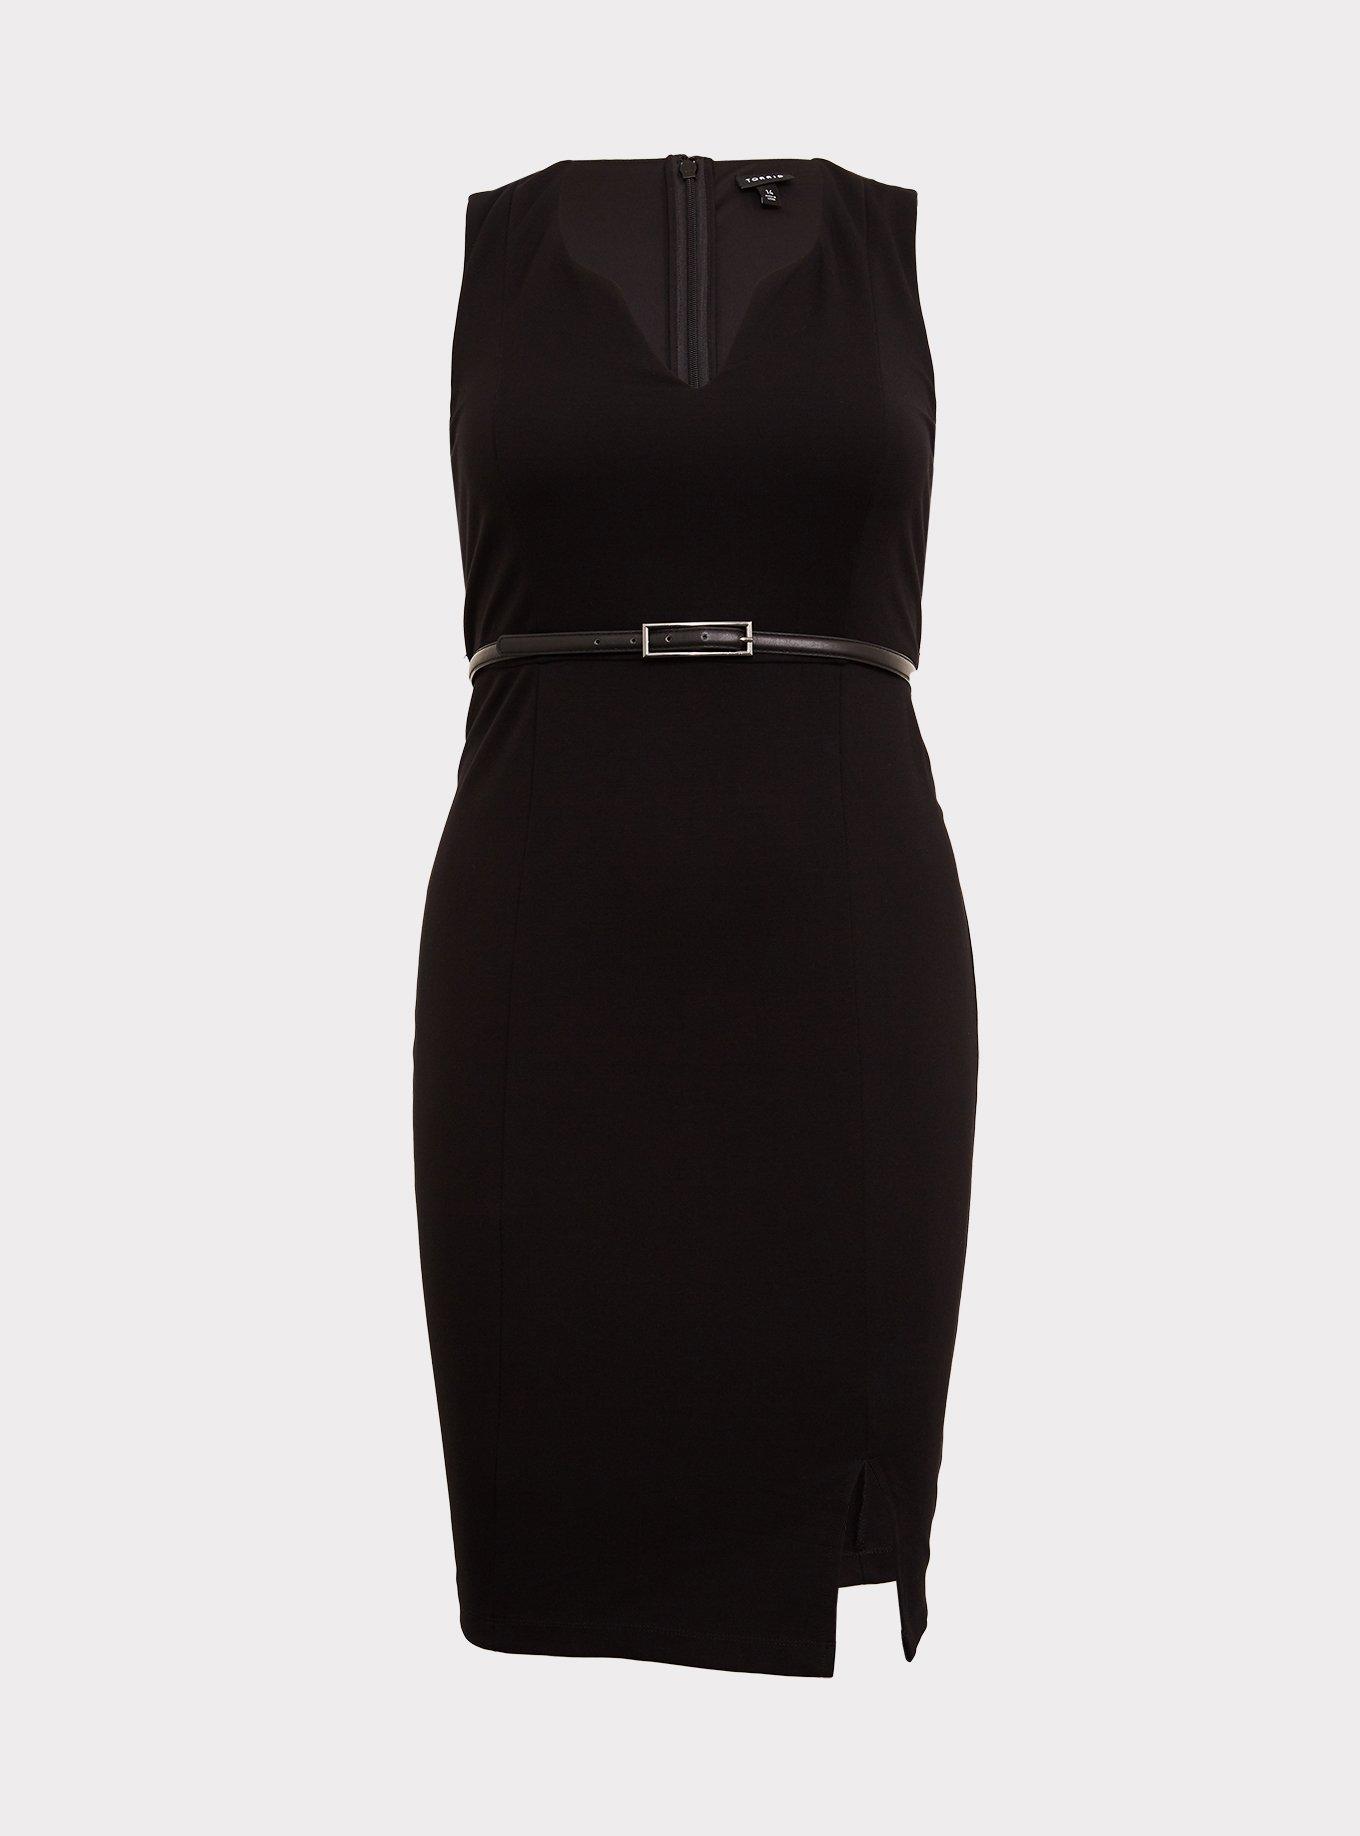 Plus Size - Black Premium Ponte Sheath Dress with Belt - Torrid